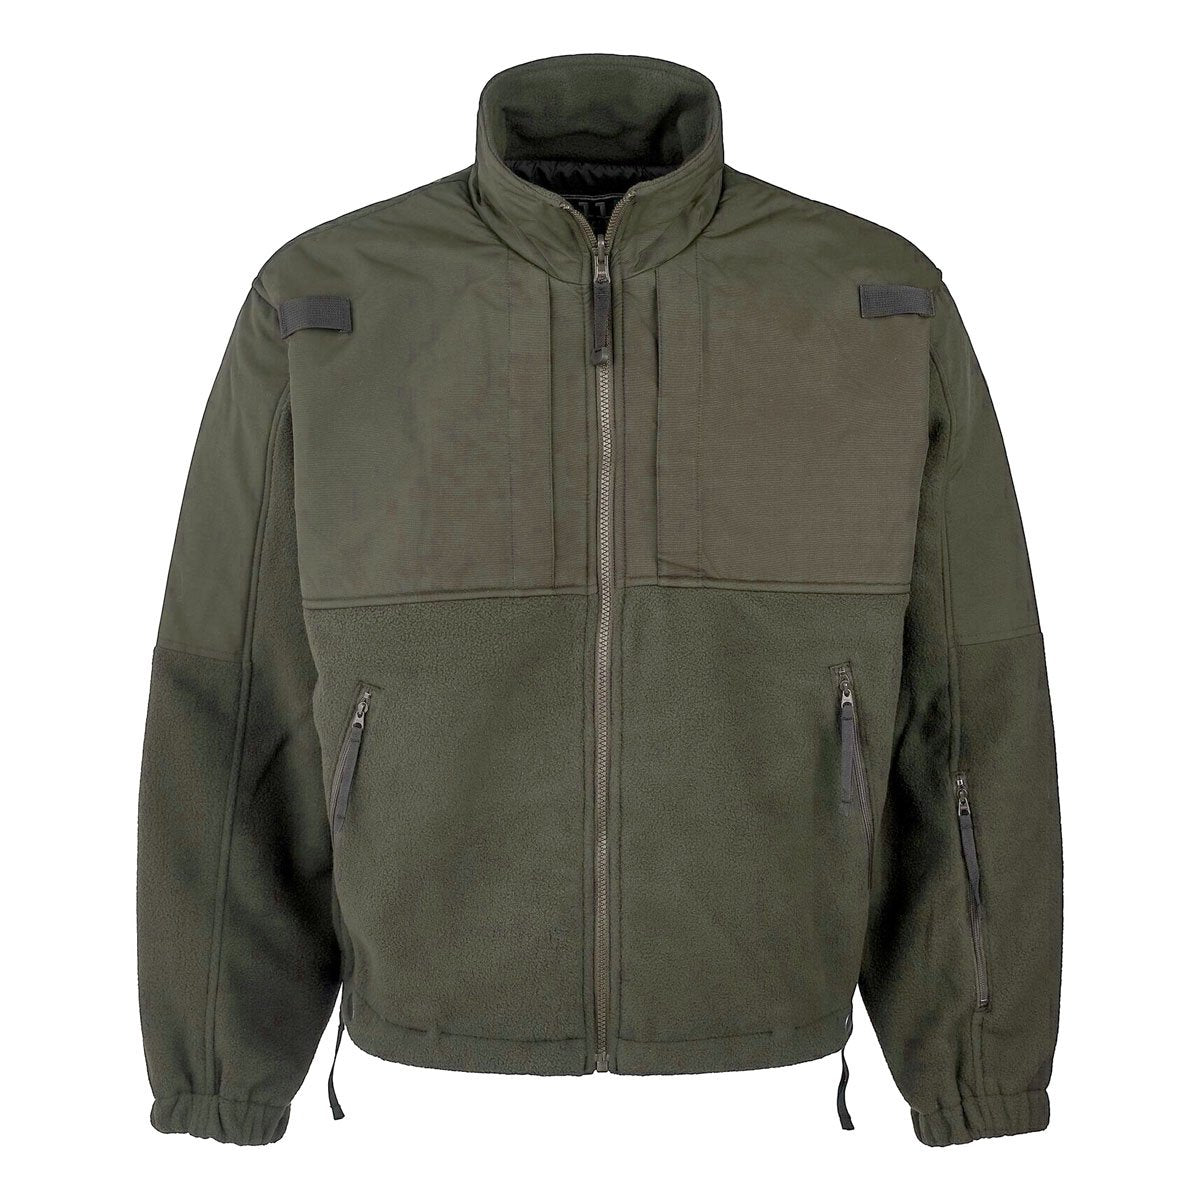 5.11 Tactical Fleece Jacket Outerwear 5.11 Tactical Sherriff Green Small Tactical Gear Supplier Tactical Distributors Australia